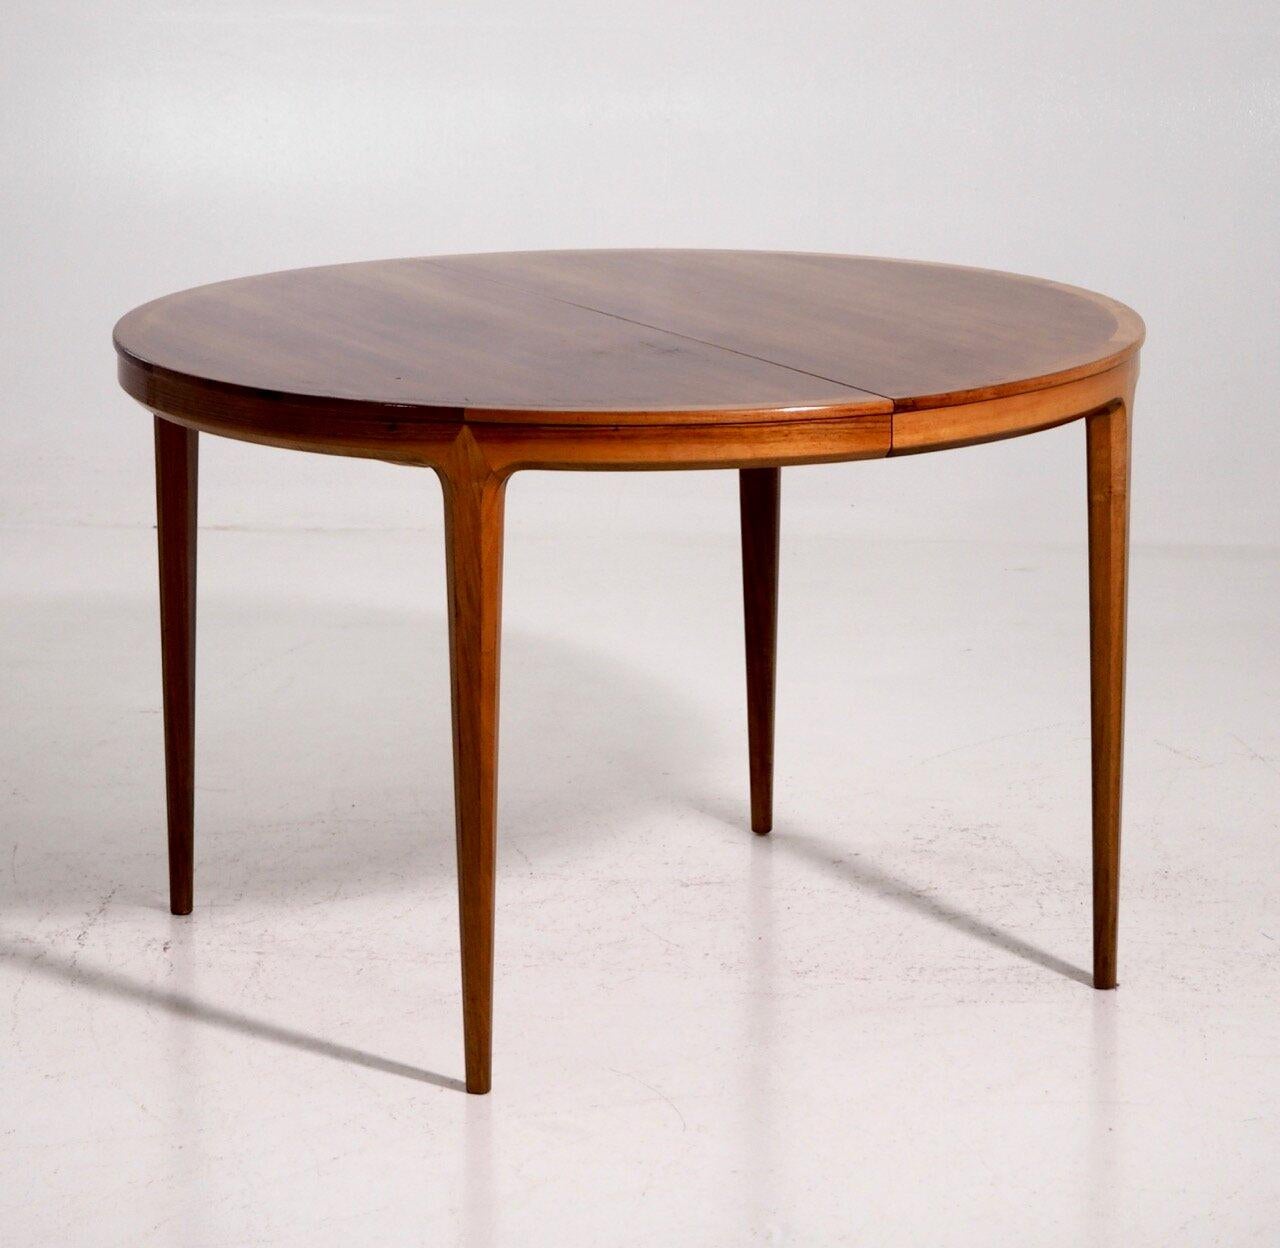 Exceptional extension table by Bertil Fridhagen for Bodafors, 1959. With minor wear.
Measurements:
H. 74 H-apron. 68 Dia. 115 Each leaf. 55 Total L. 225 cm.
H. 29.1 H-apron. 26.7 Dia. 45.2 Each leaf. 21.6 Total L. 88.5 in.